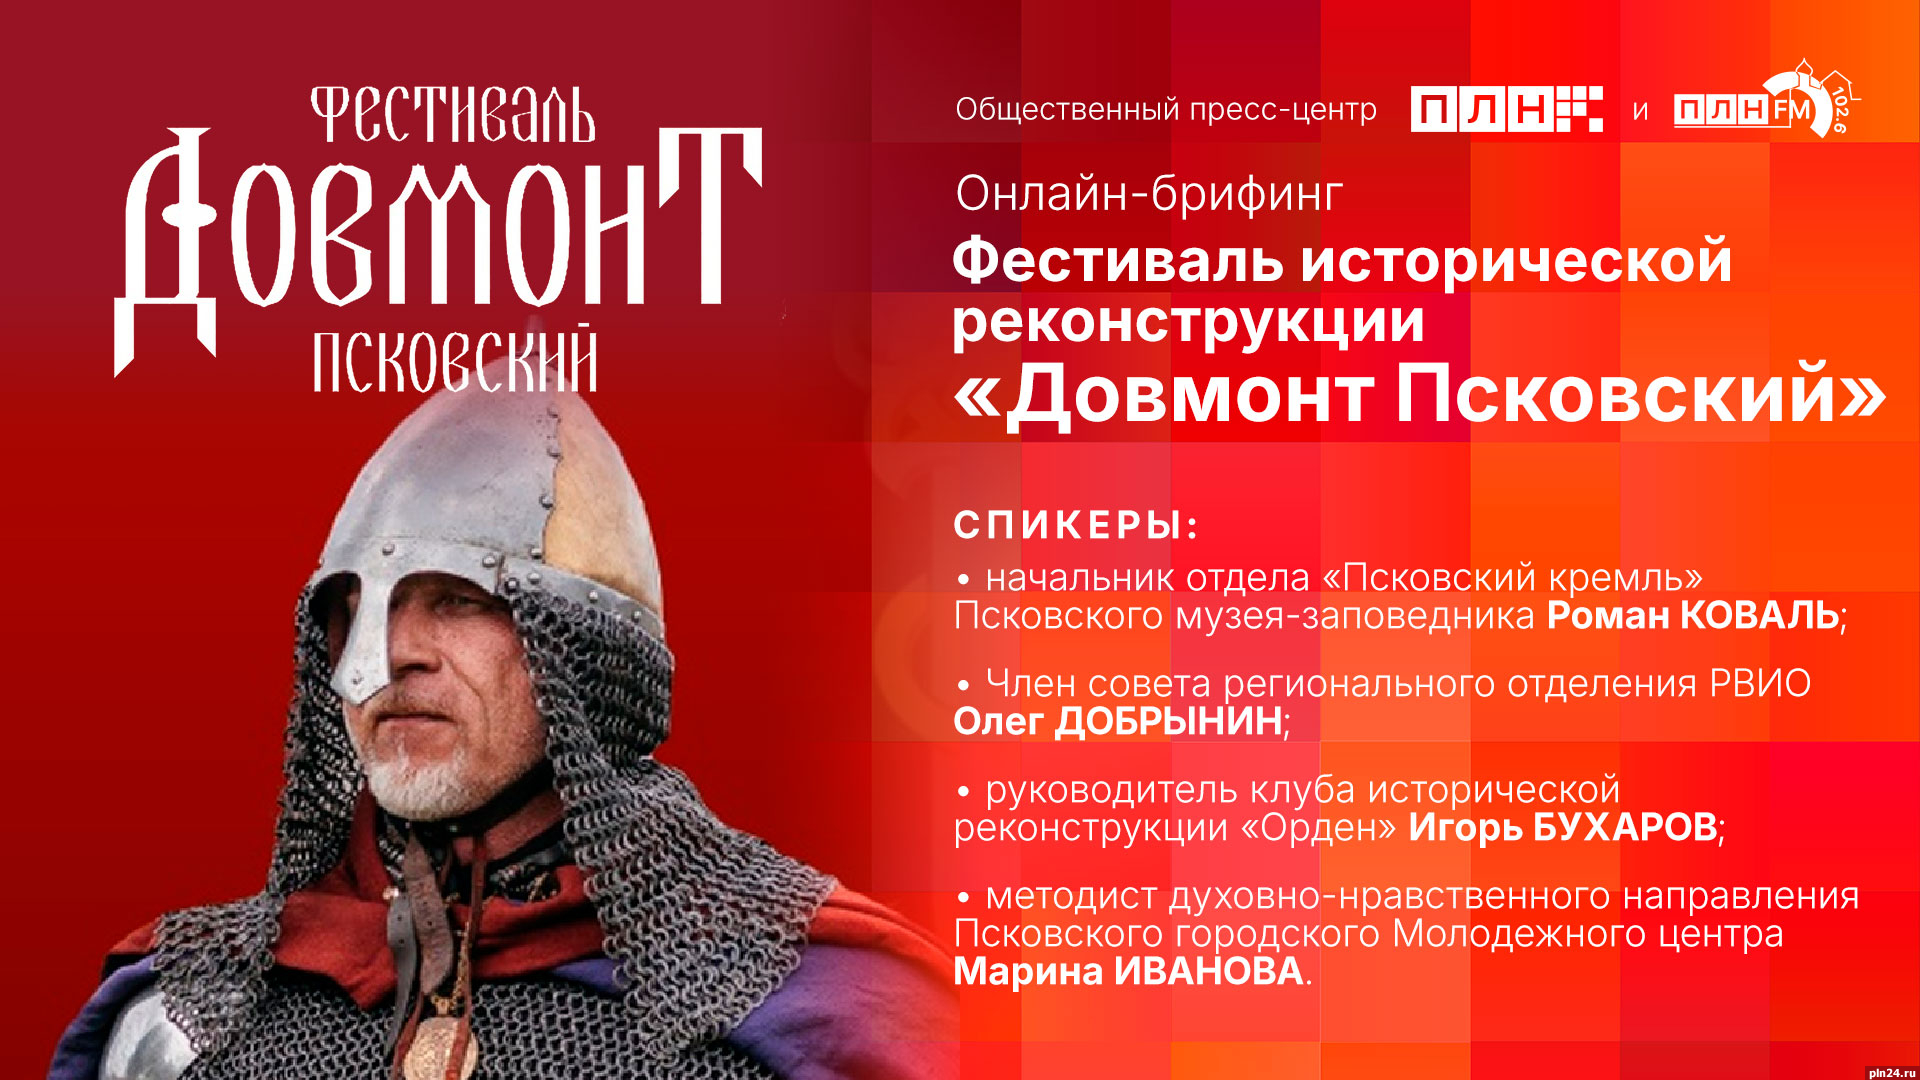 Фестивалю «Довмонт Псковский» будет посвящен брифинг в пресс-центре ПЛН